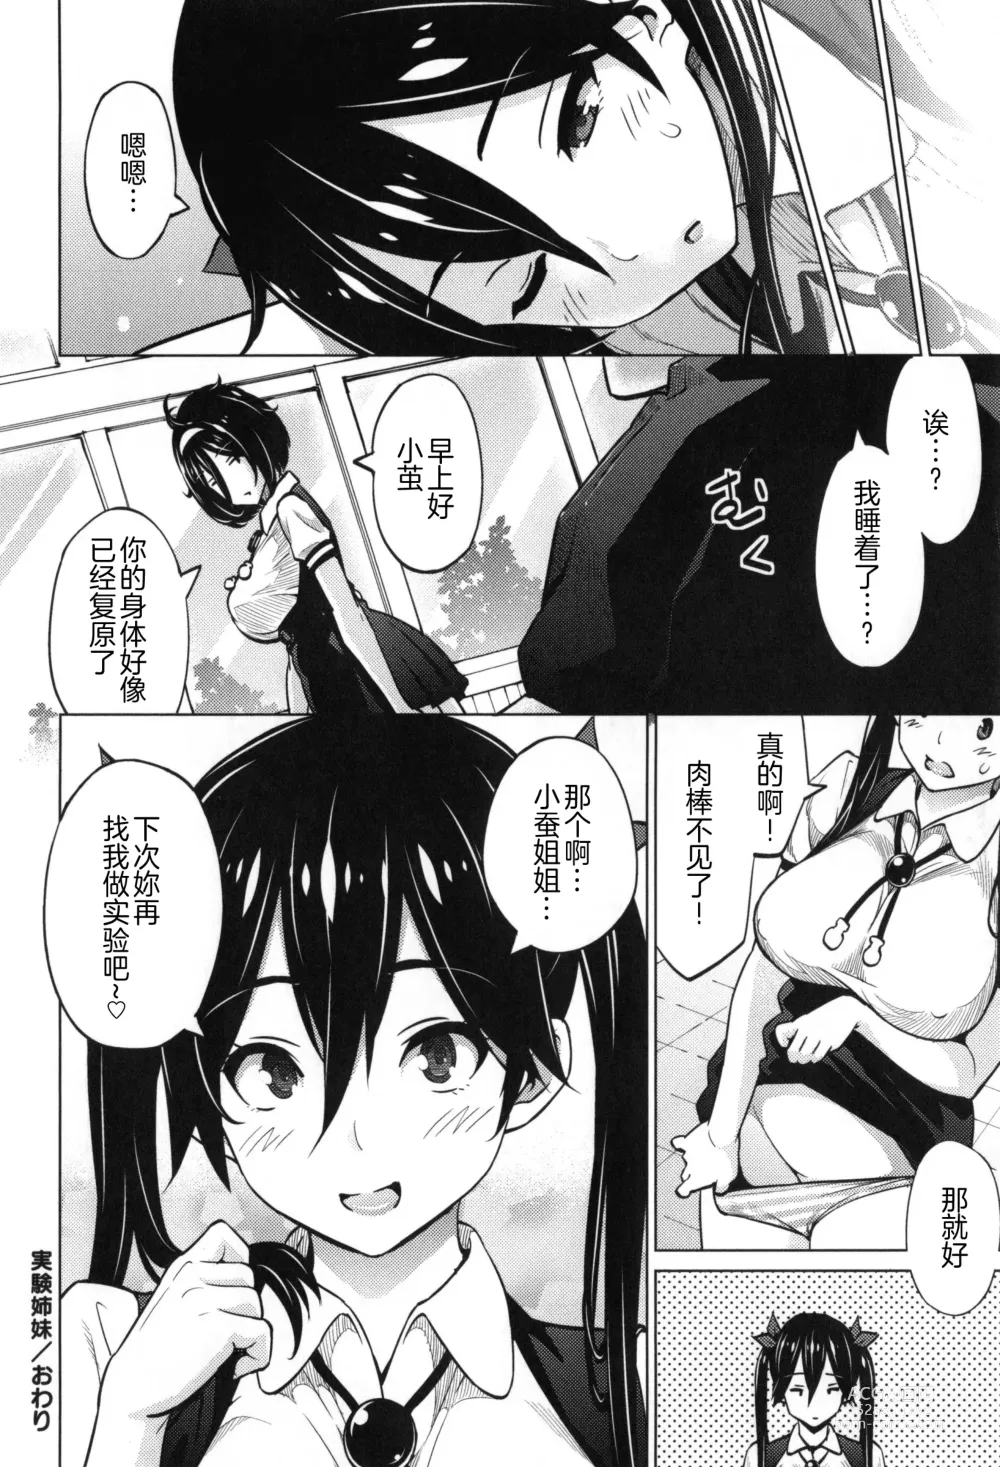 Page 213 of manga Photorare SEX & photograph